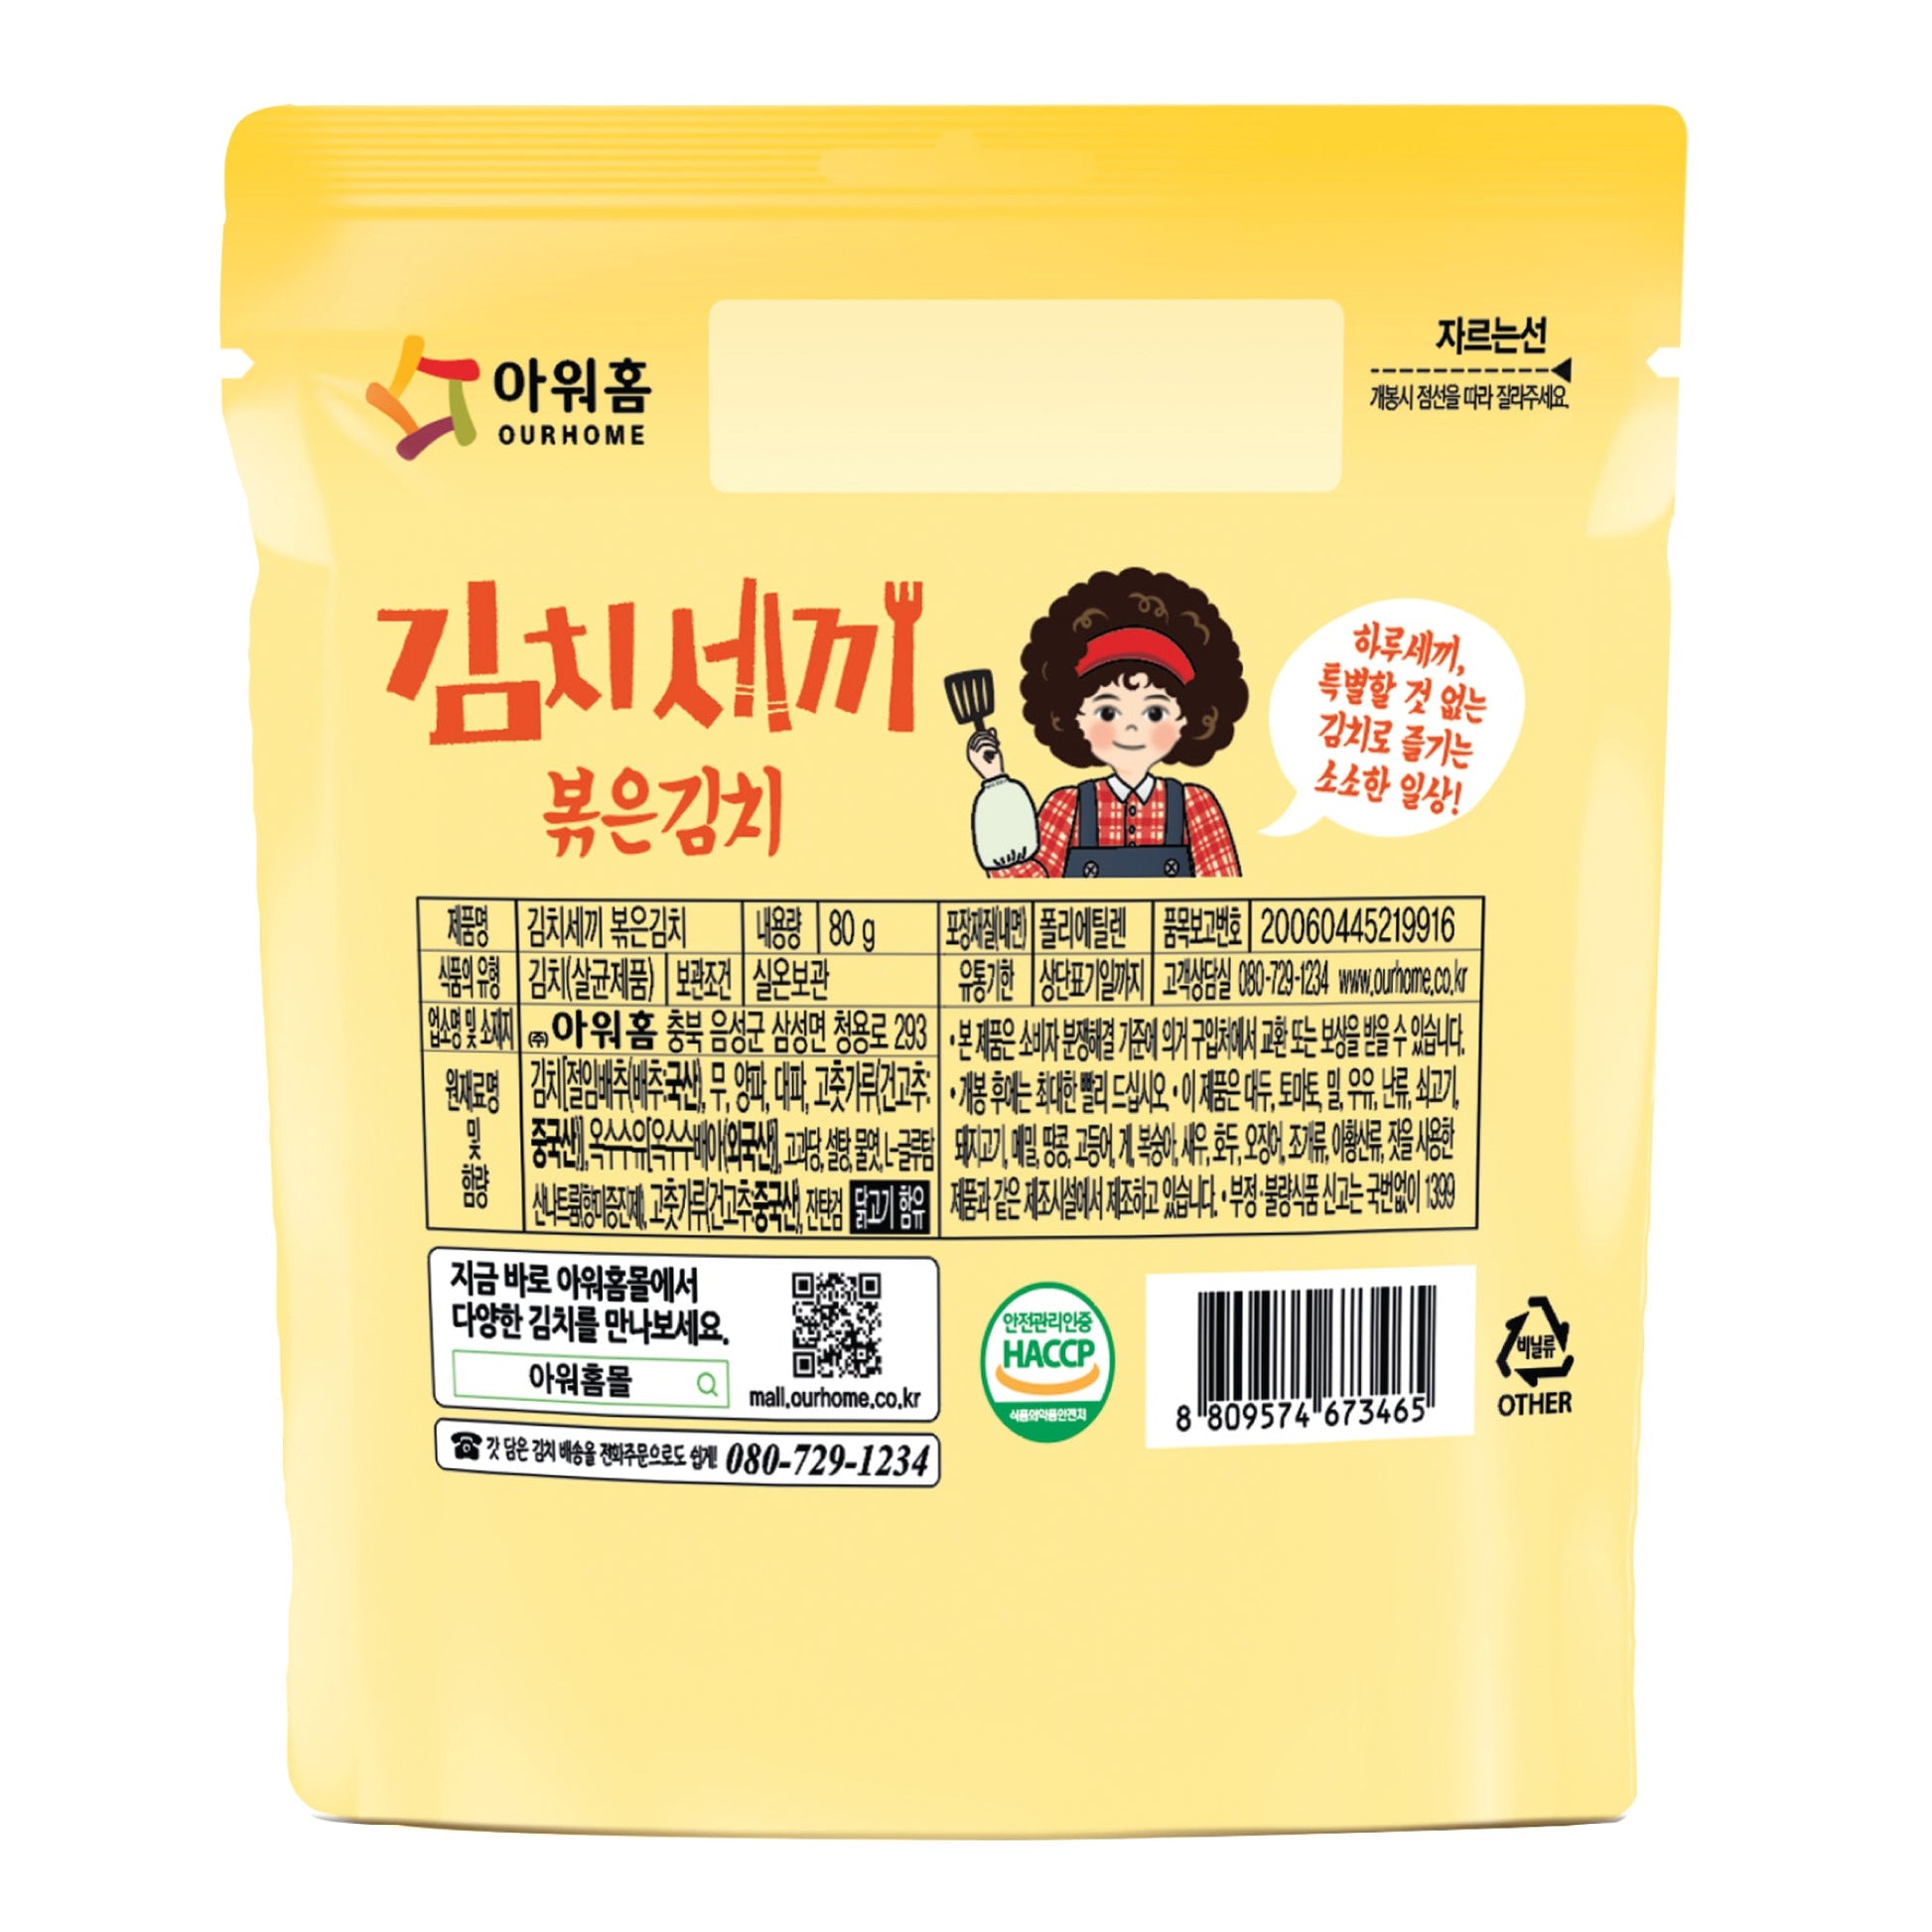 OURHOME Stir Fried Korean Beachoo Kimchi Mini (80g) - CoKoYam